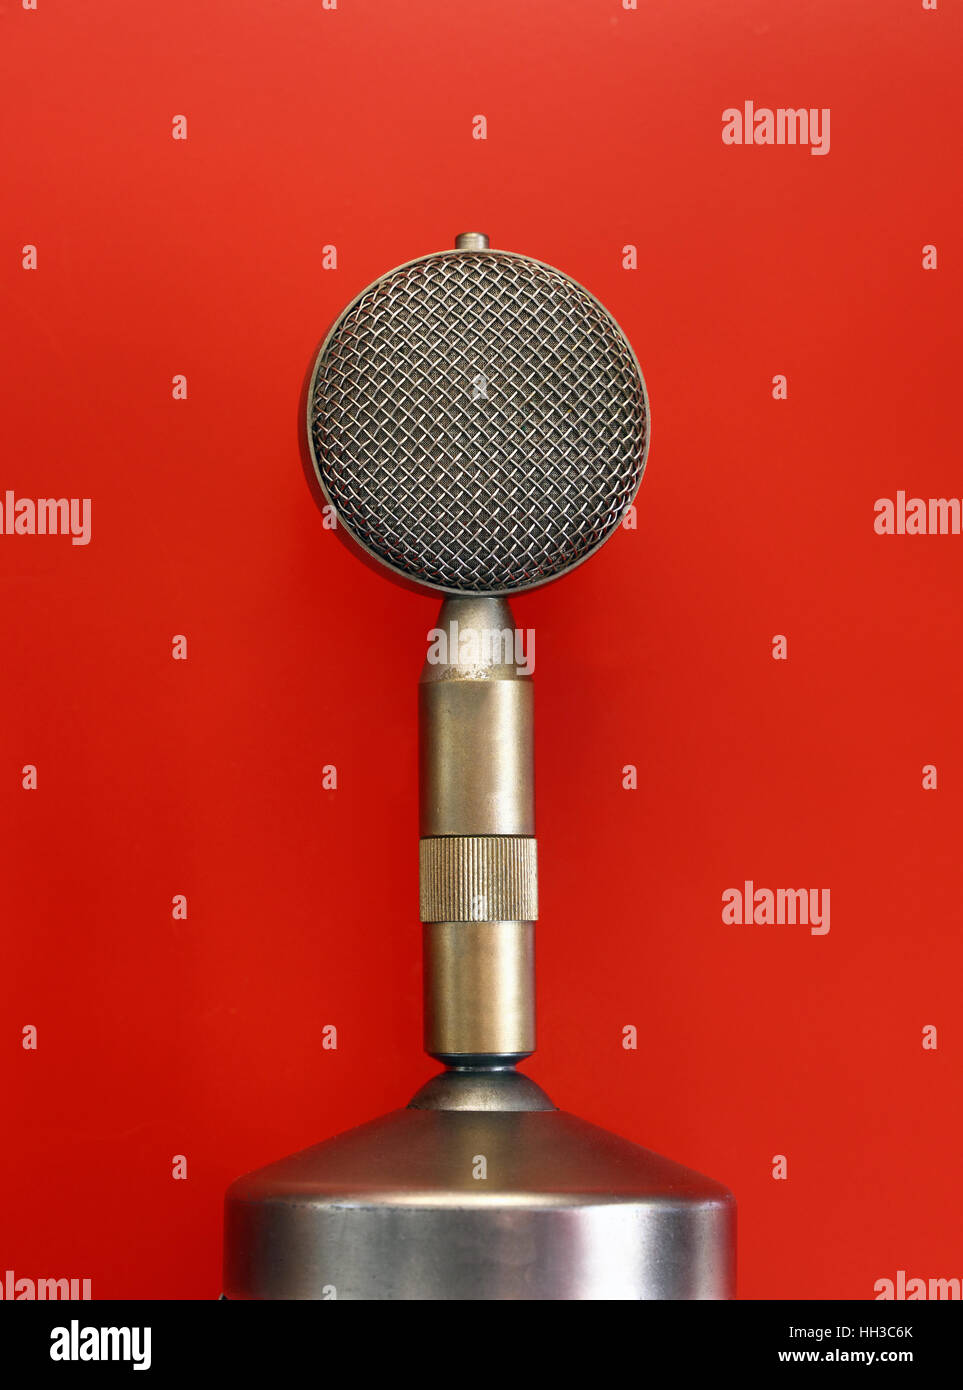 Vintage Retro antigua micrófono vocal redonda metálica vista lateral estrecha sobre fondo rojo. Foto de stock